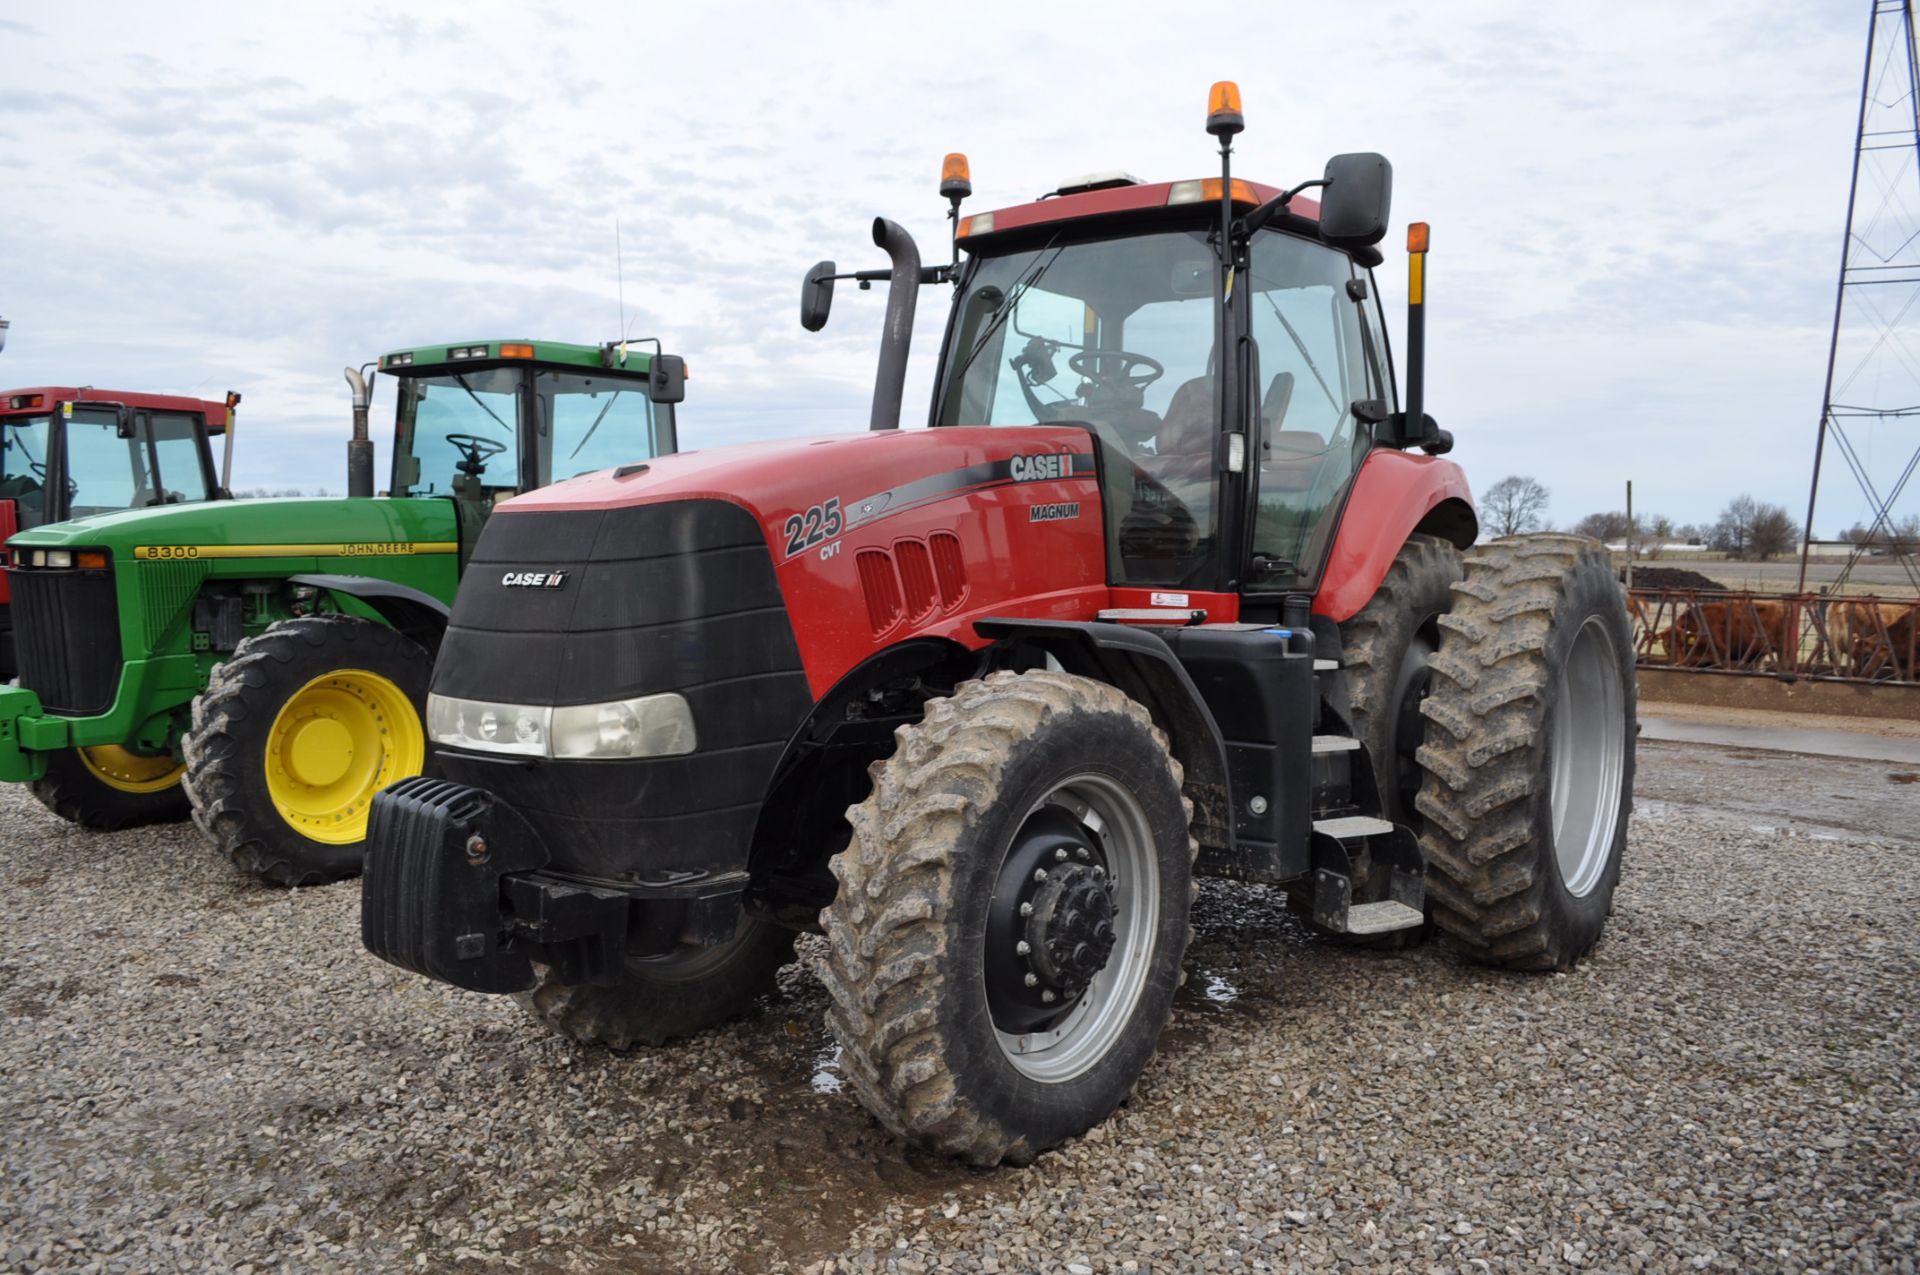 Case IH Magnum 225 tractor, MFWD, 480/80 R 46 duals, 380/85 R 34 front, CVT, 4 hyd remotes, 540/1000